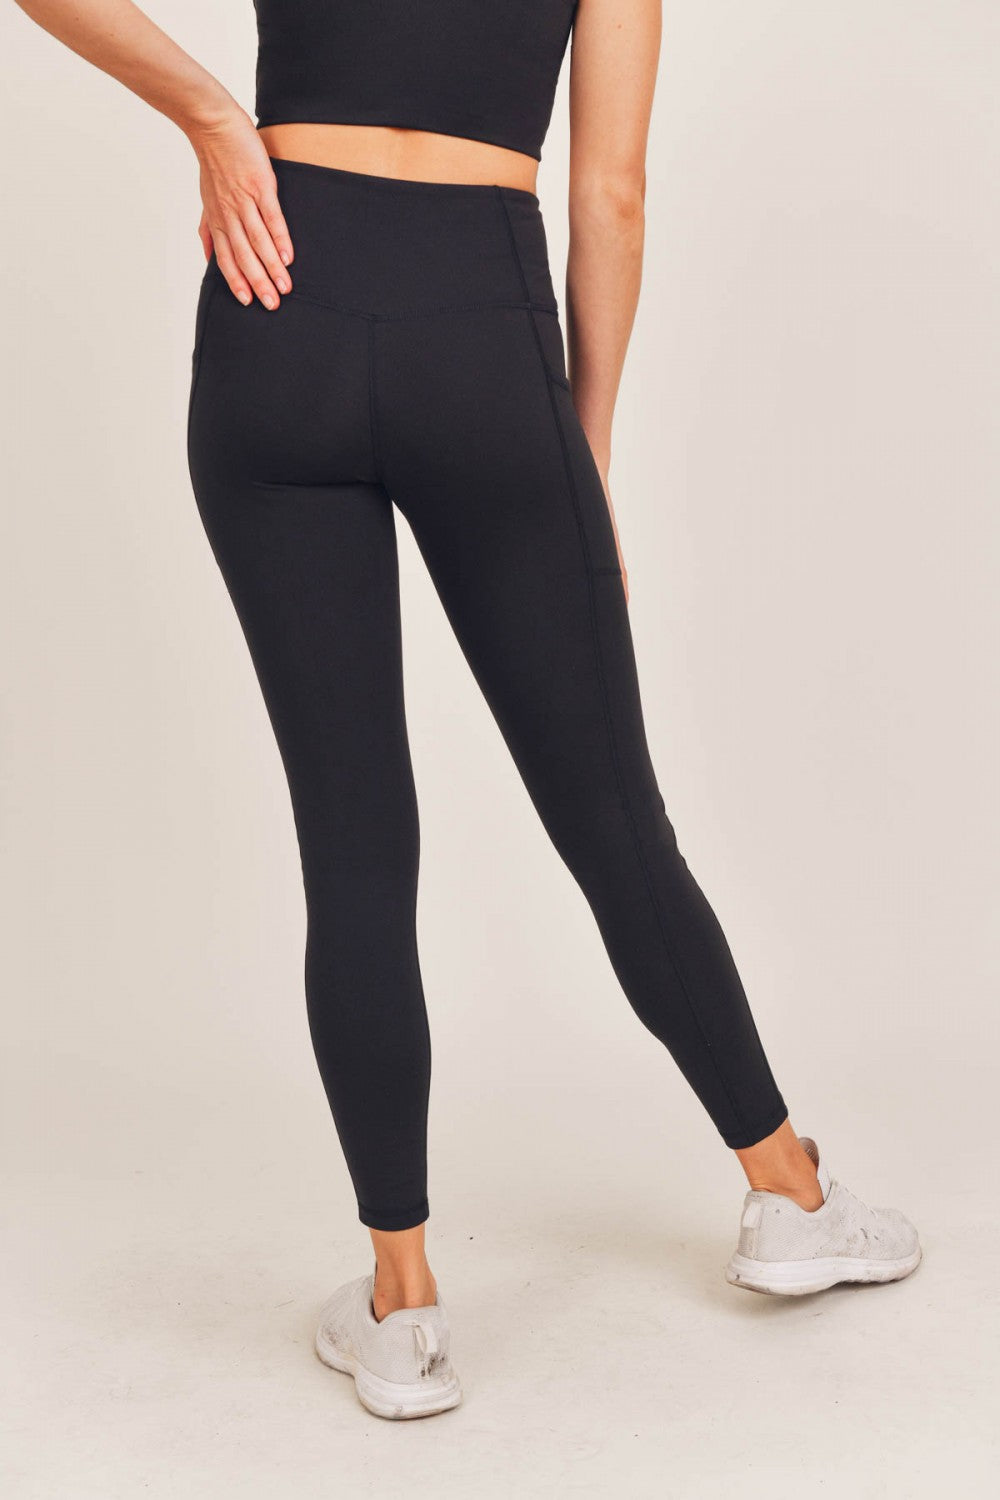 zuwimk Yoga Pants Long,Women No Front Seam Buttery Soft Leggings Ruched  High Waist Yoga Pants Black,S - Walmart.com